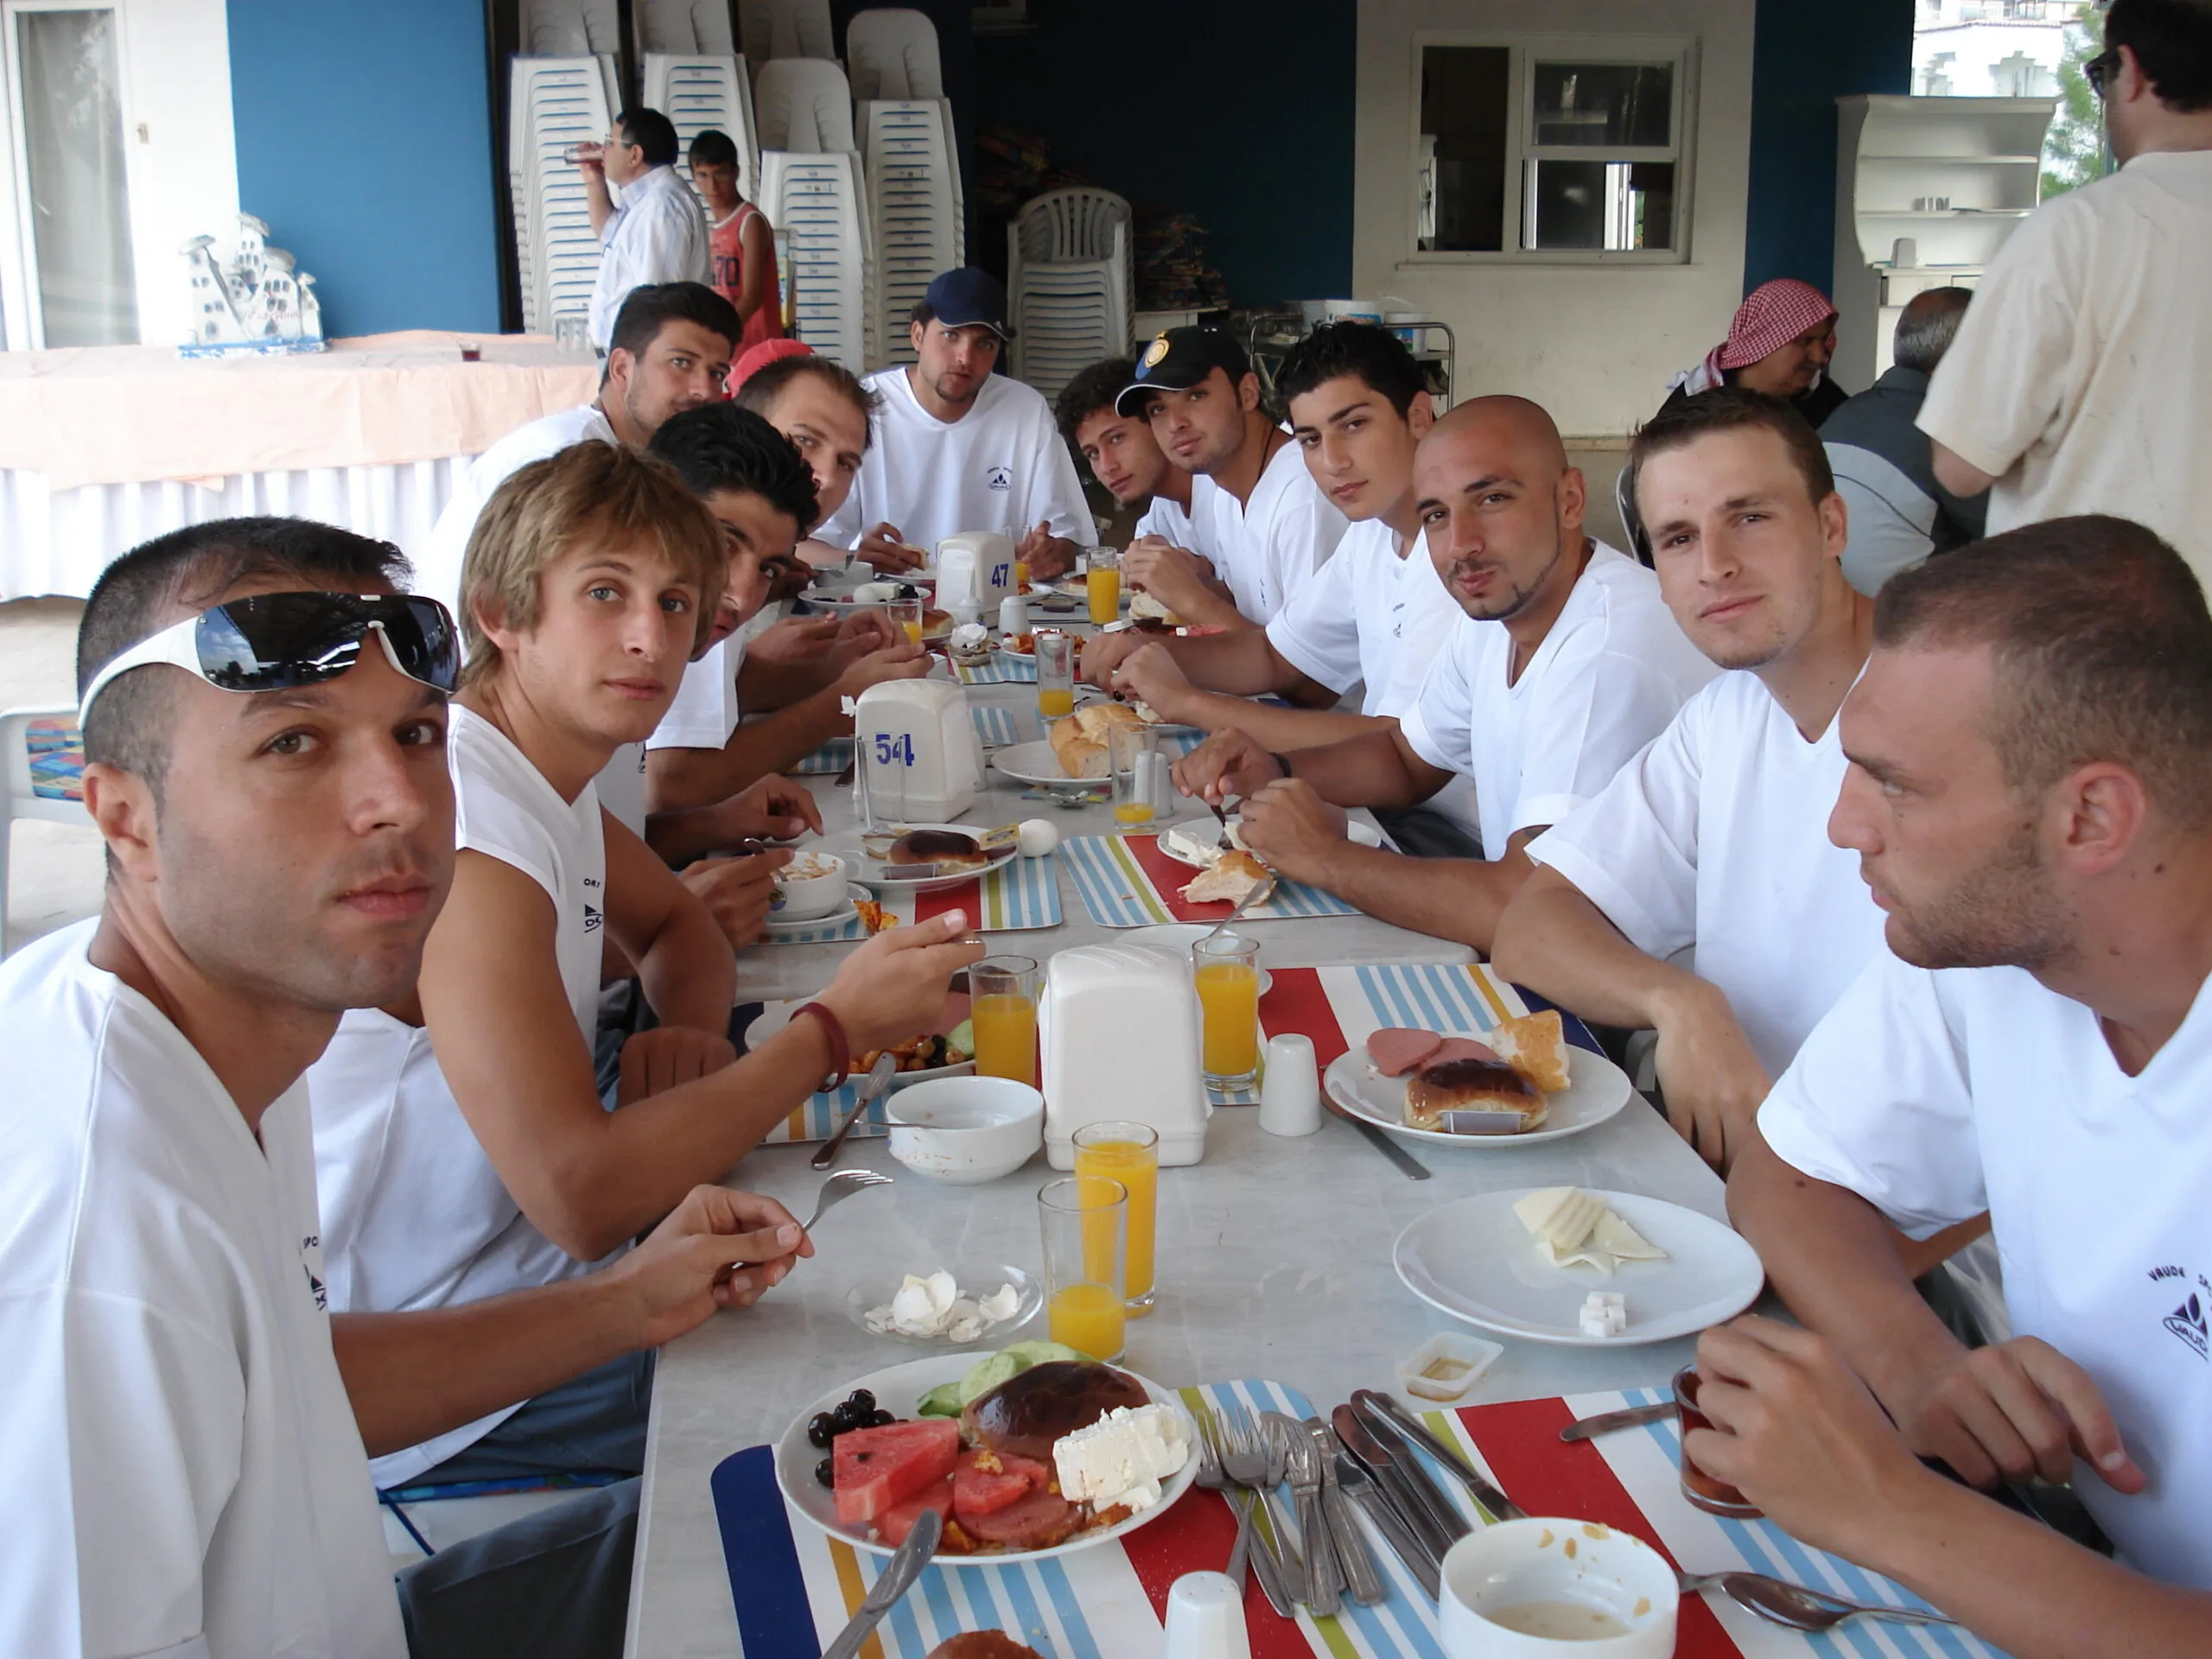 Um time de basquete, todos vestidos de branco, comendo juntos